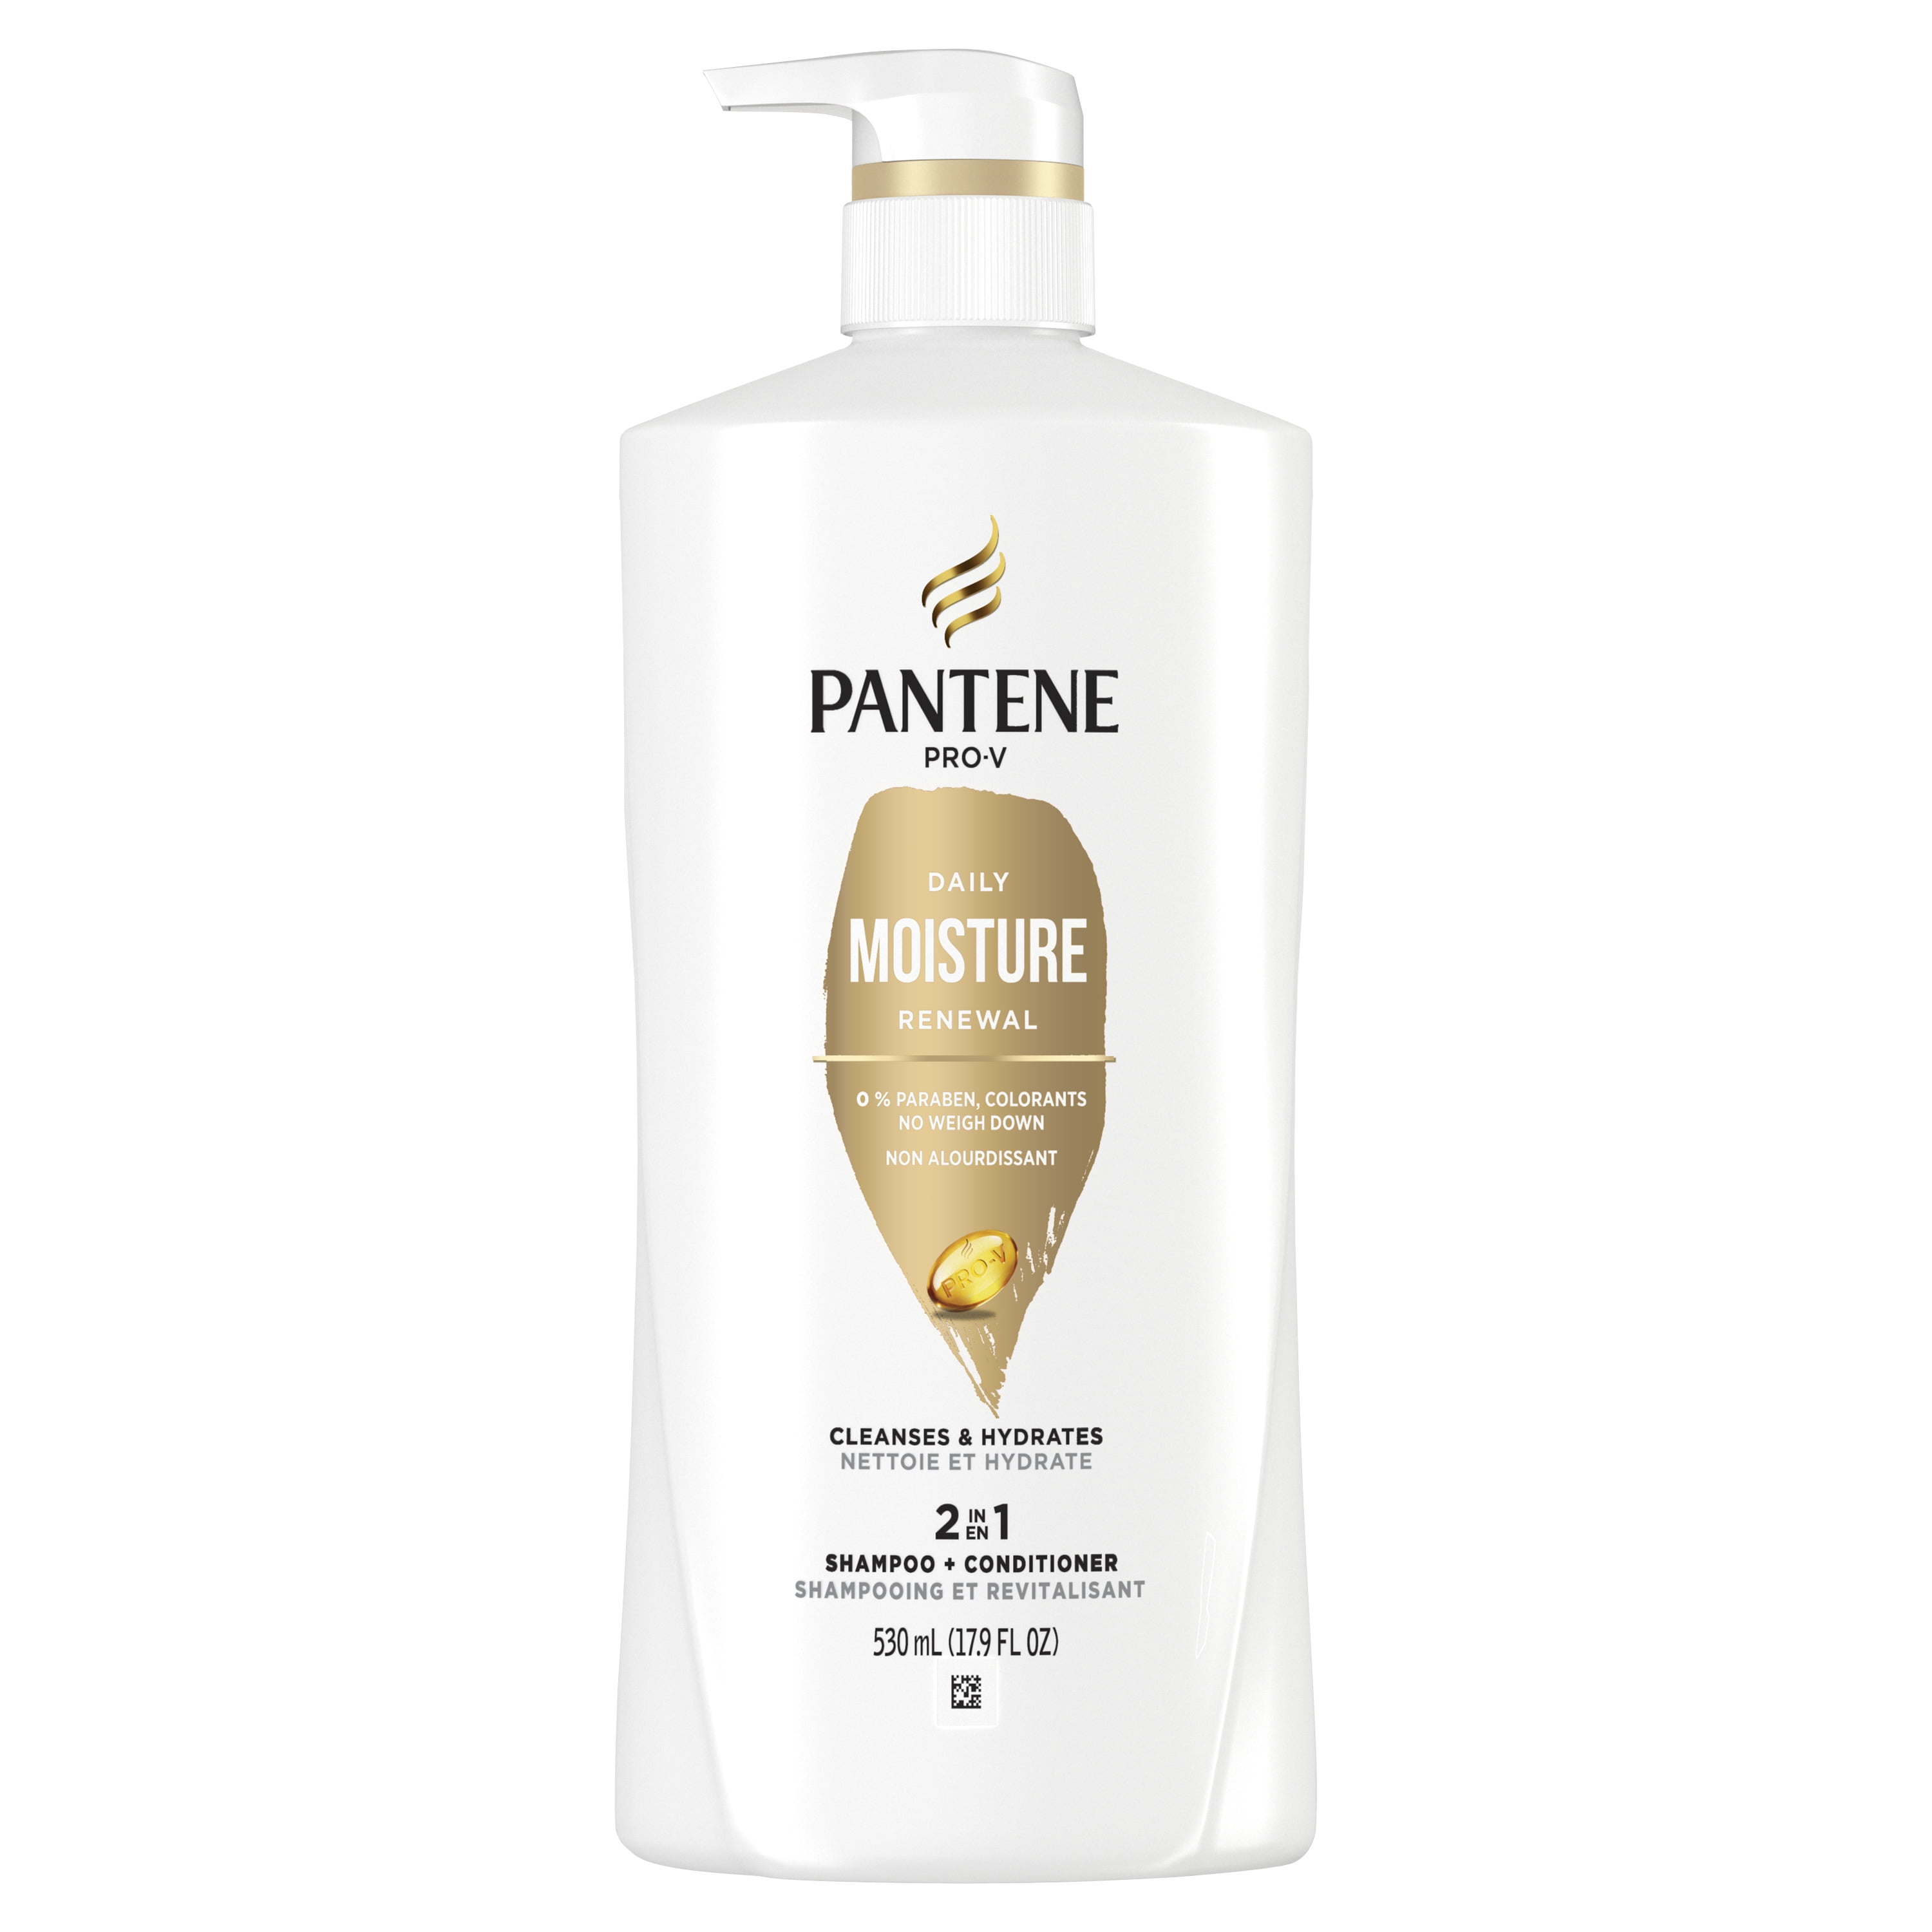 Pantene Pro-V Daily Moisture Renewal 2 1 Shampoo + Conditioner, 17.9 oz - Walmart.com